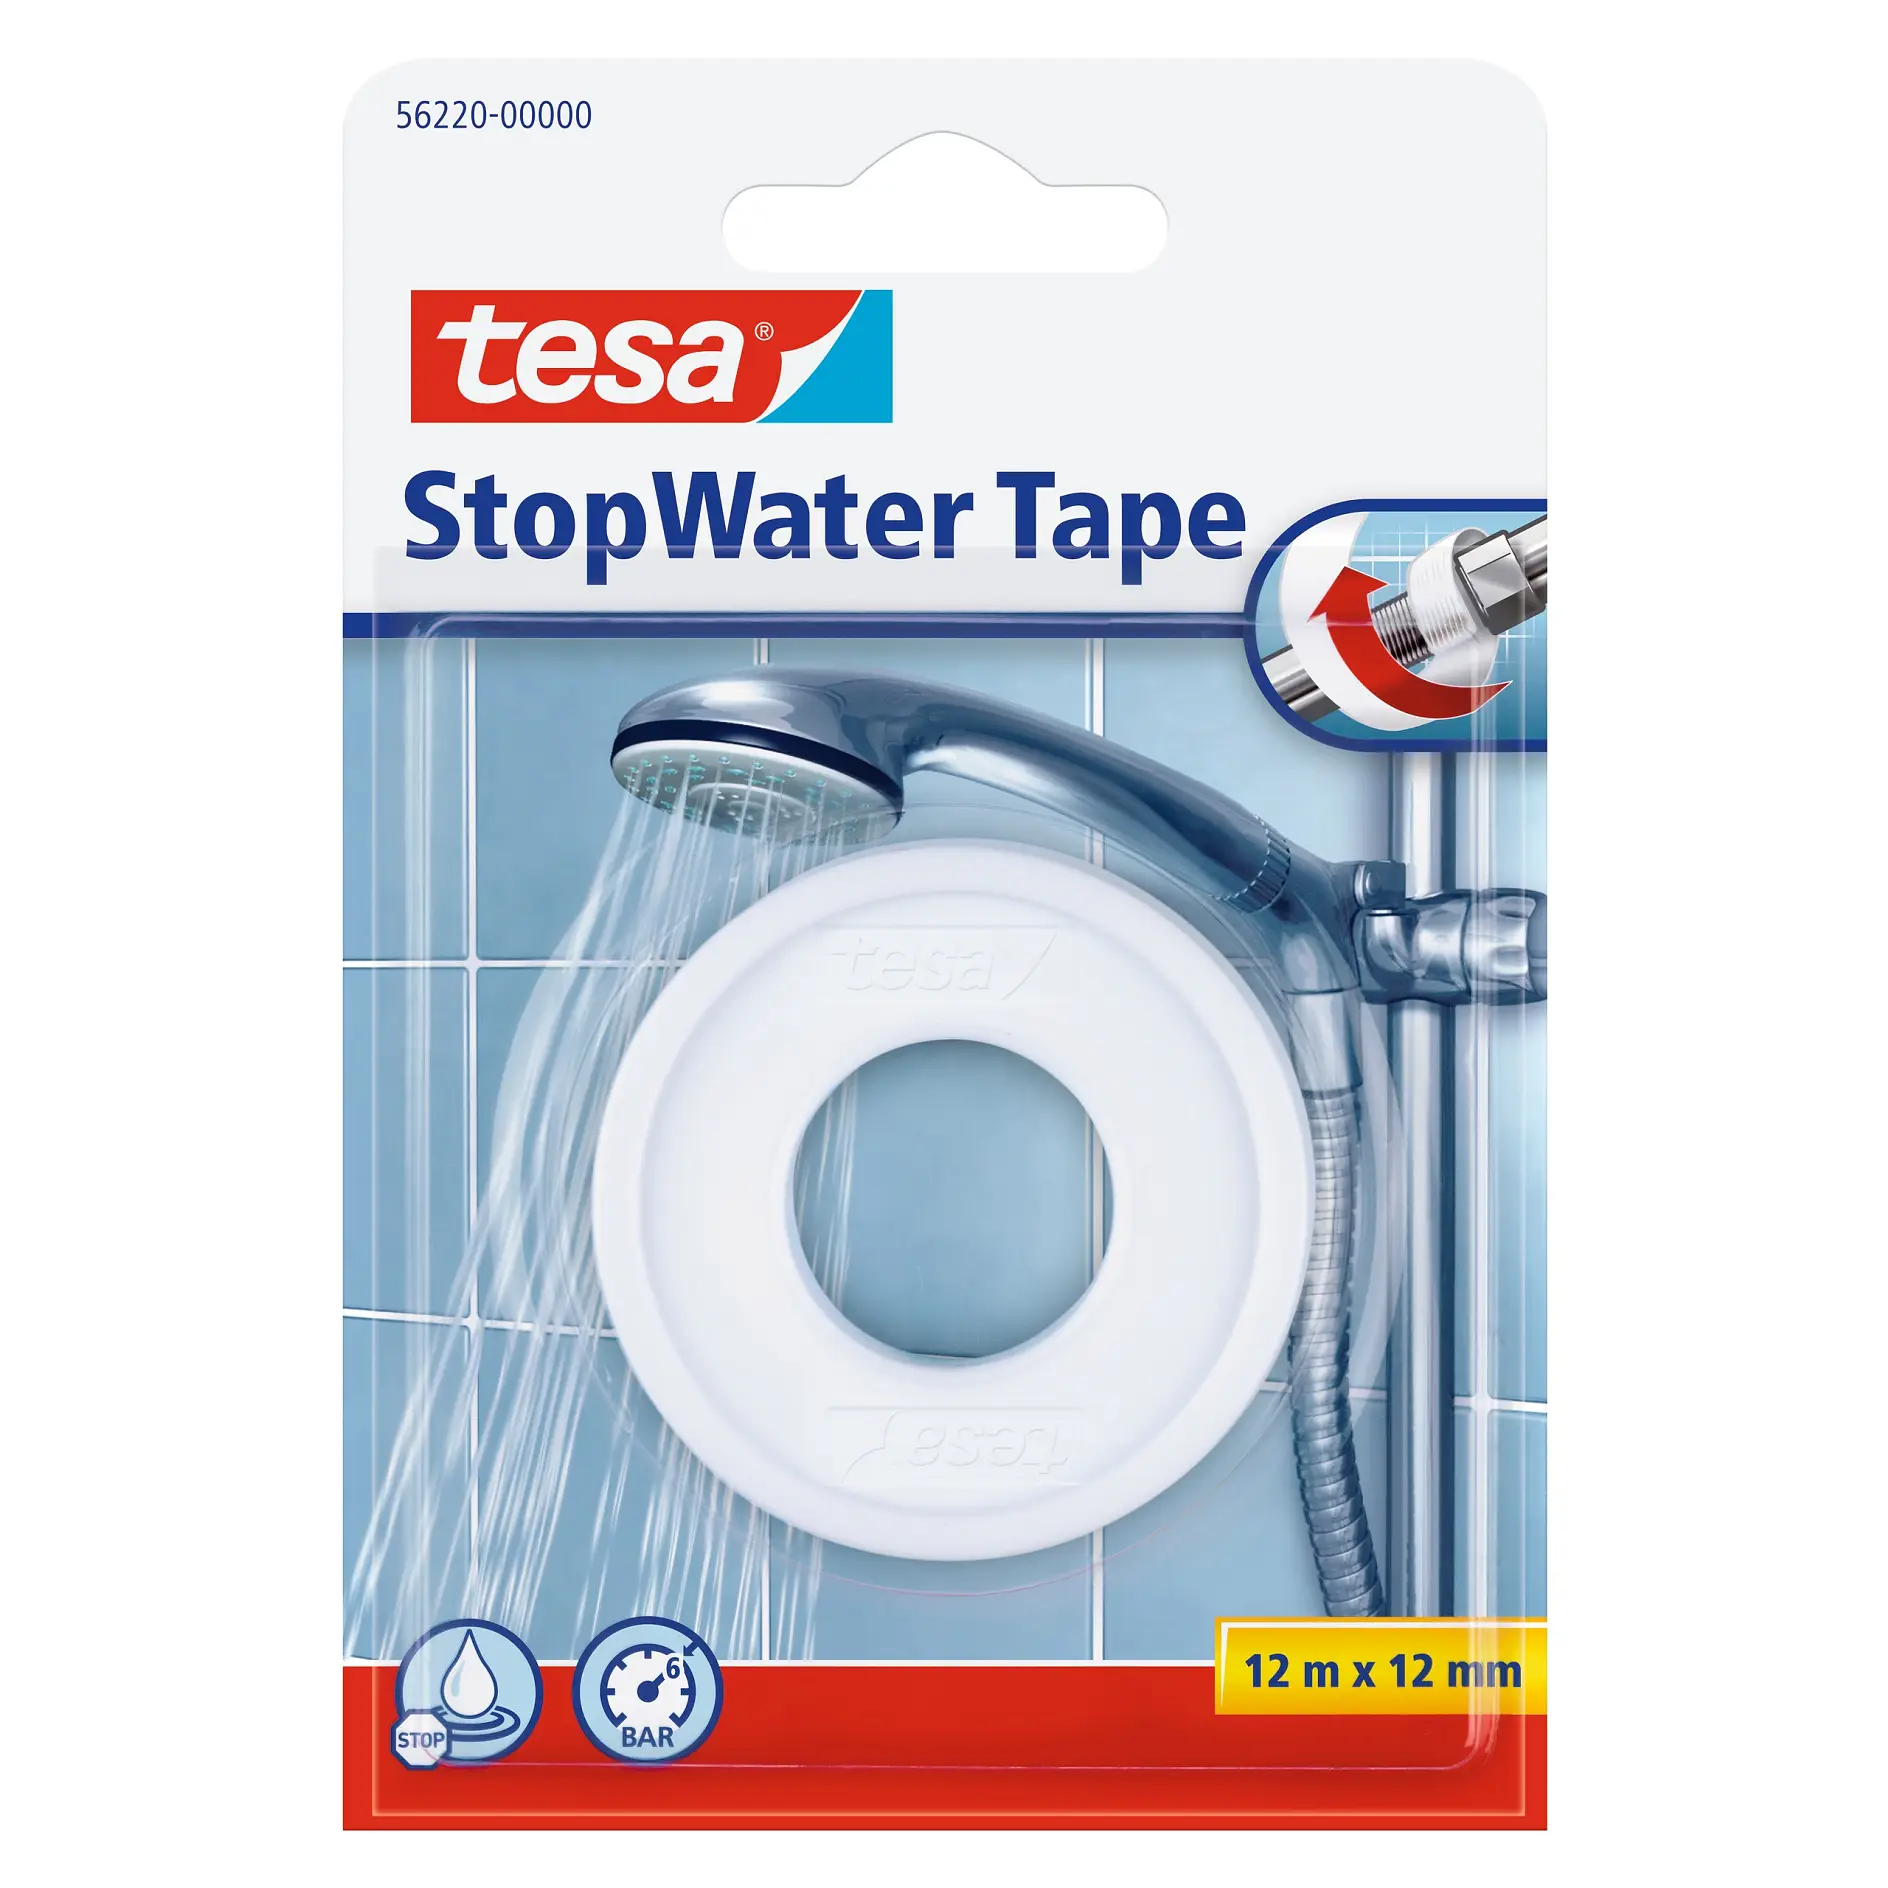 [en-en] tesa StopWater tape 12m x12mm